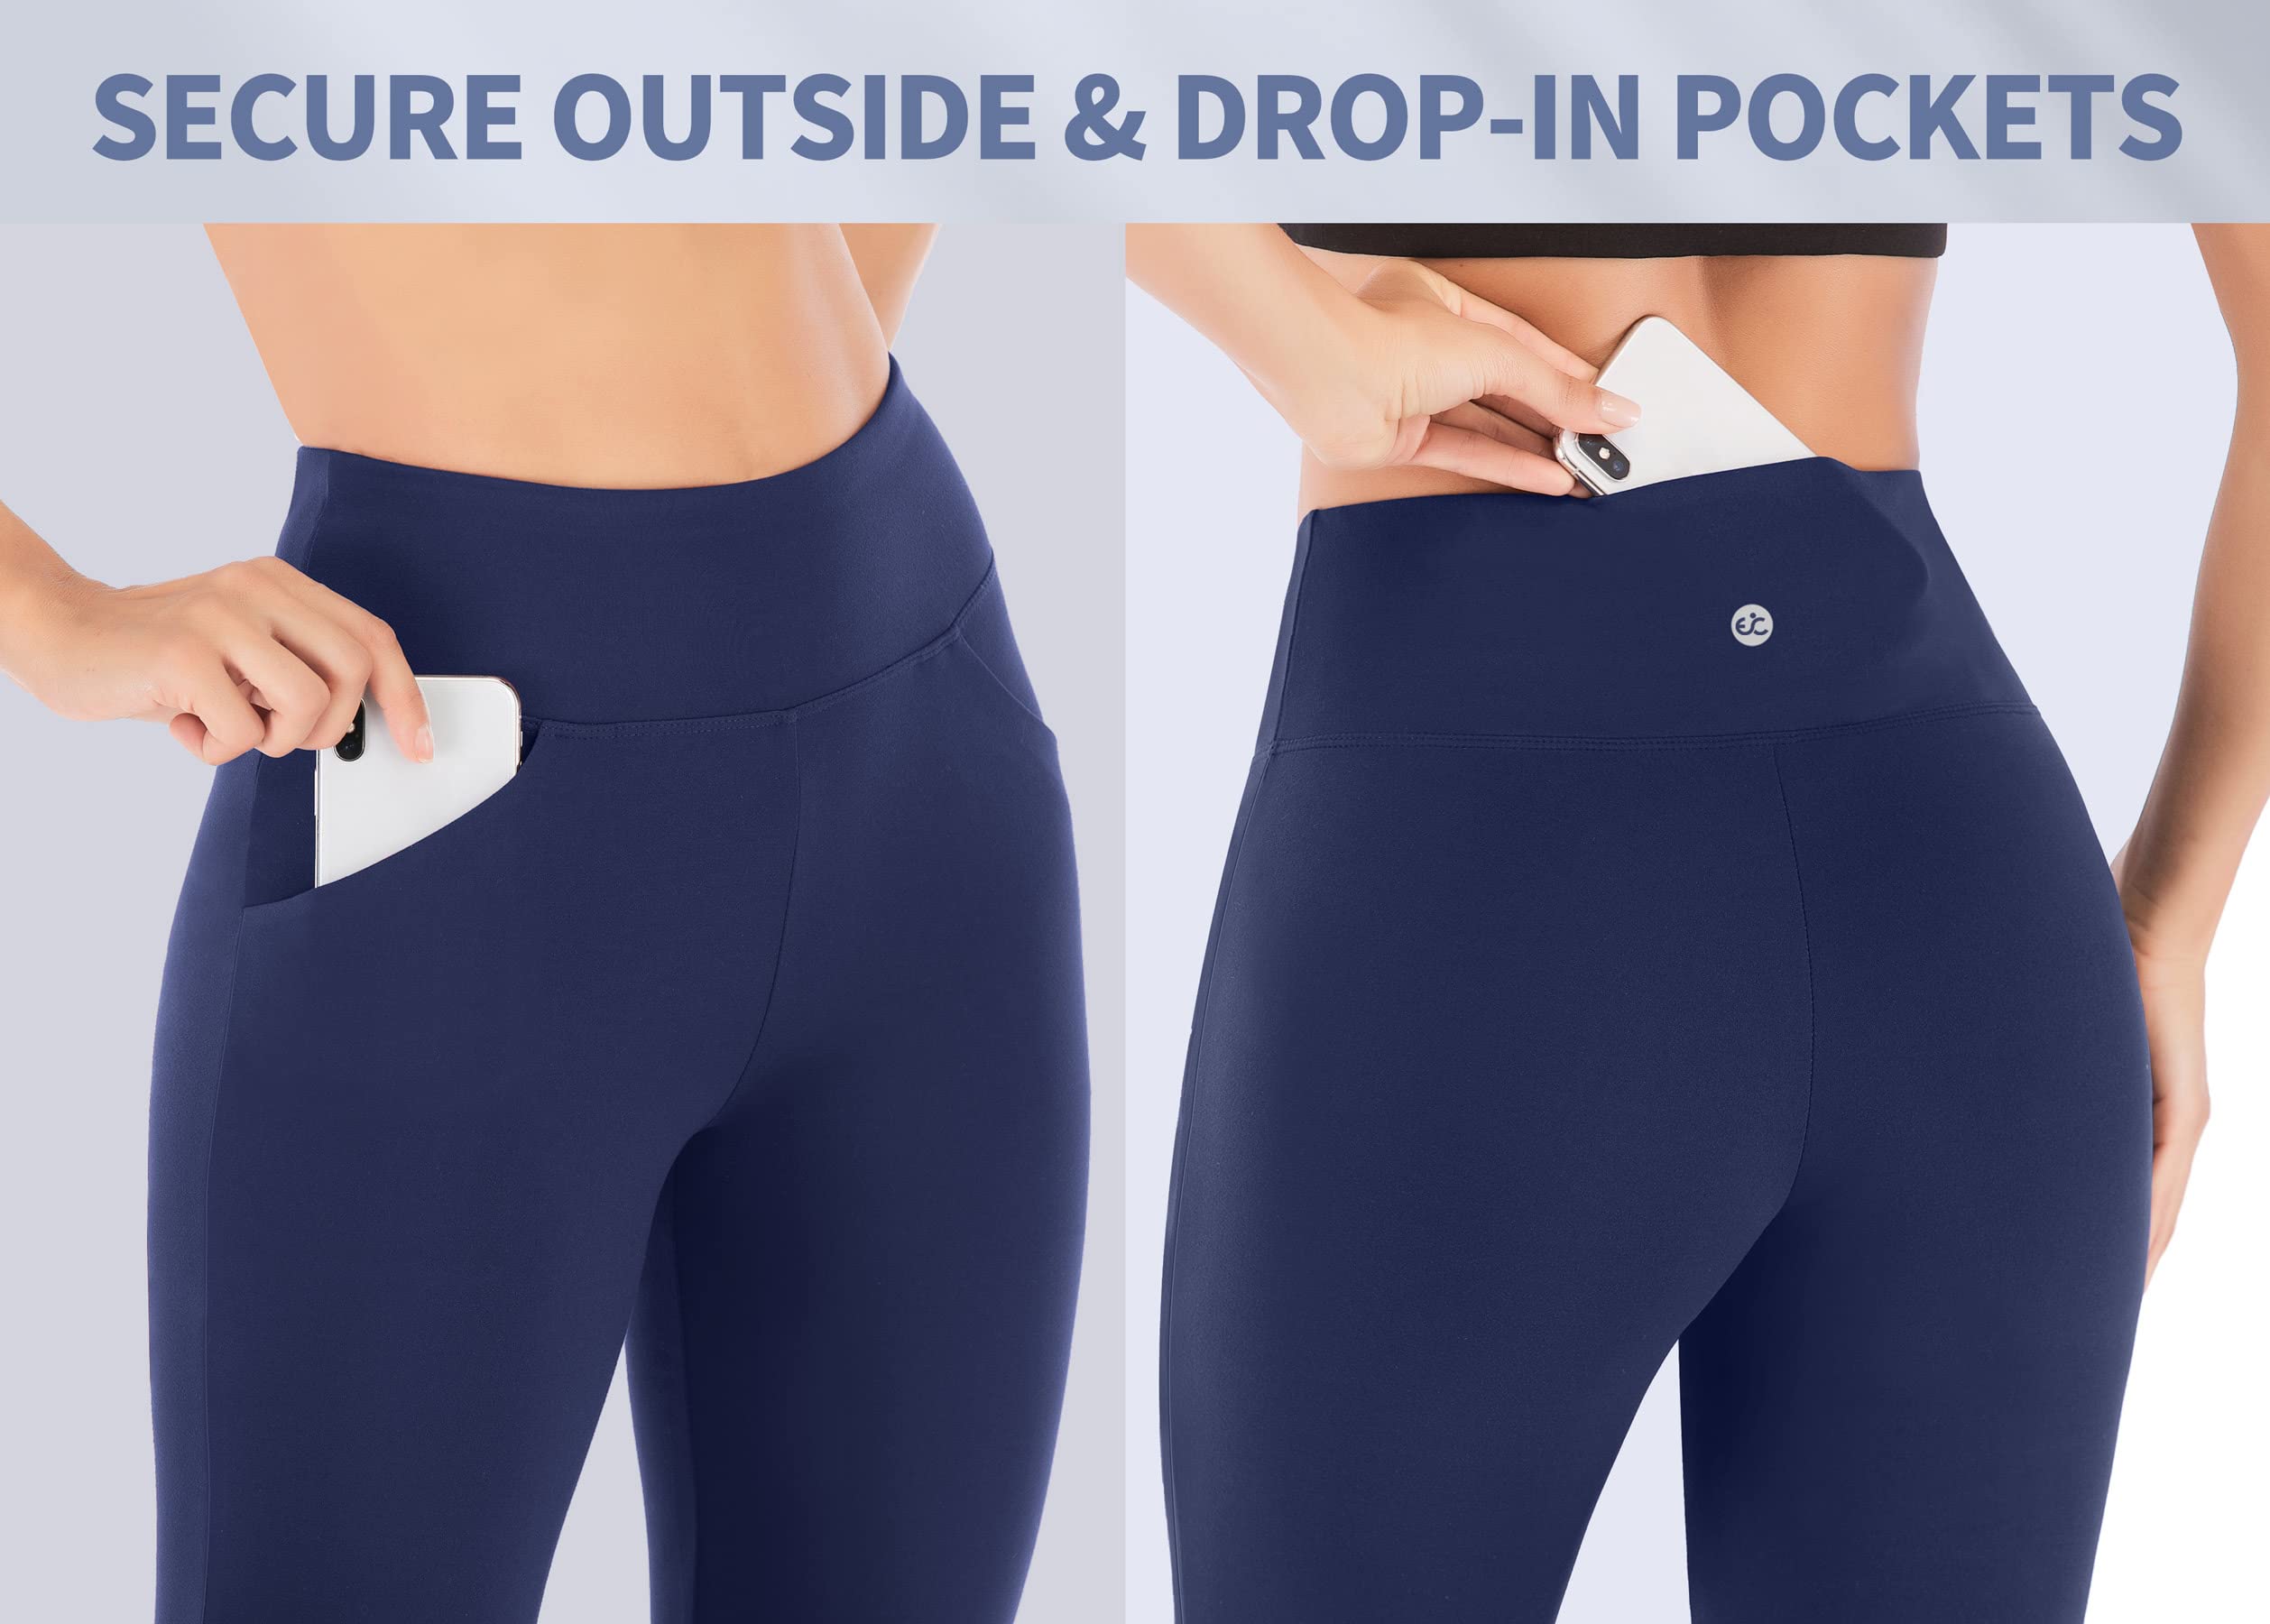 Ewedoos High Waisted Bootcut Yoga Pants with Pockets - Moisture